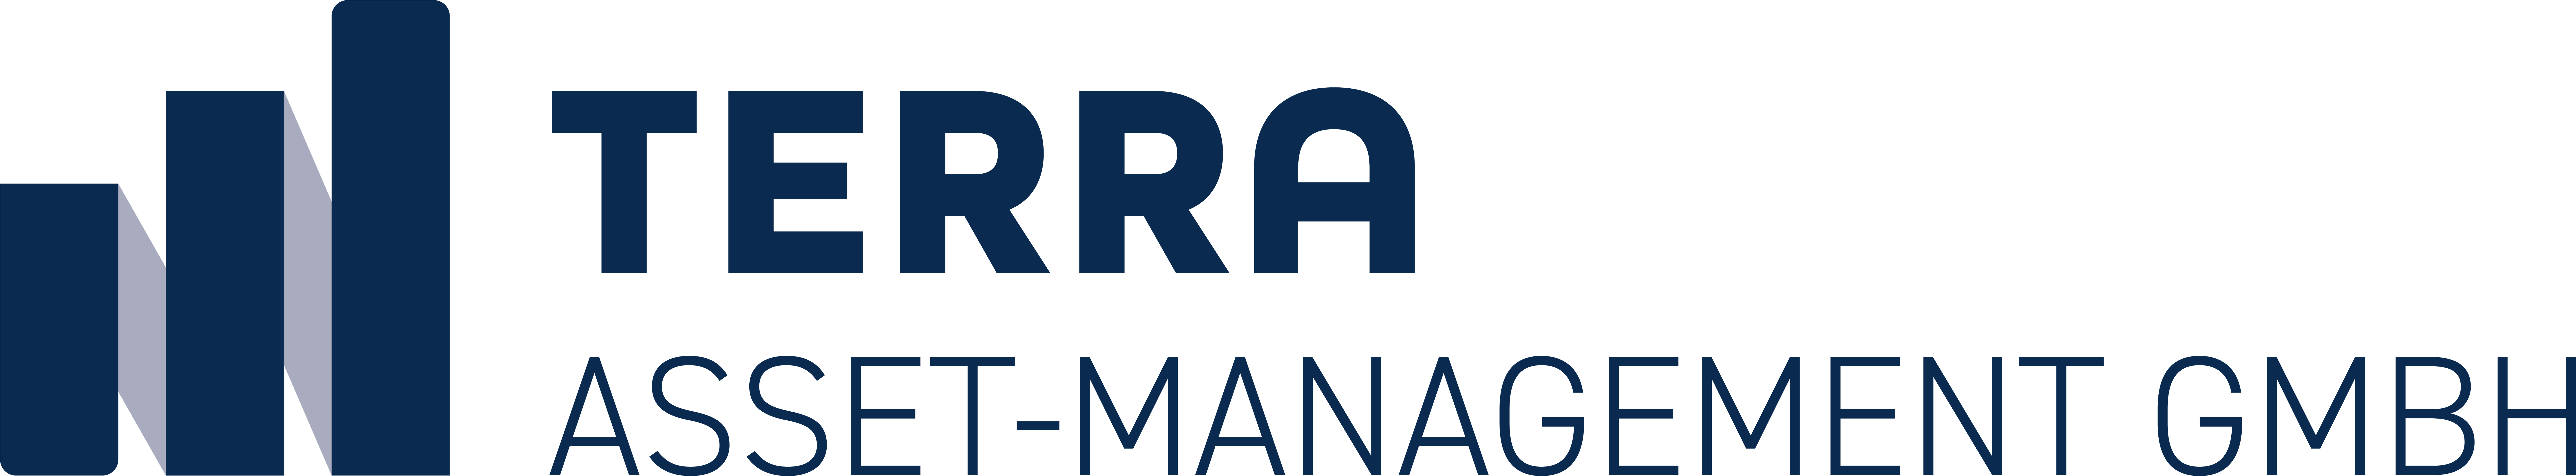 terra_asset-management.png